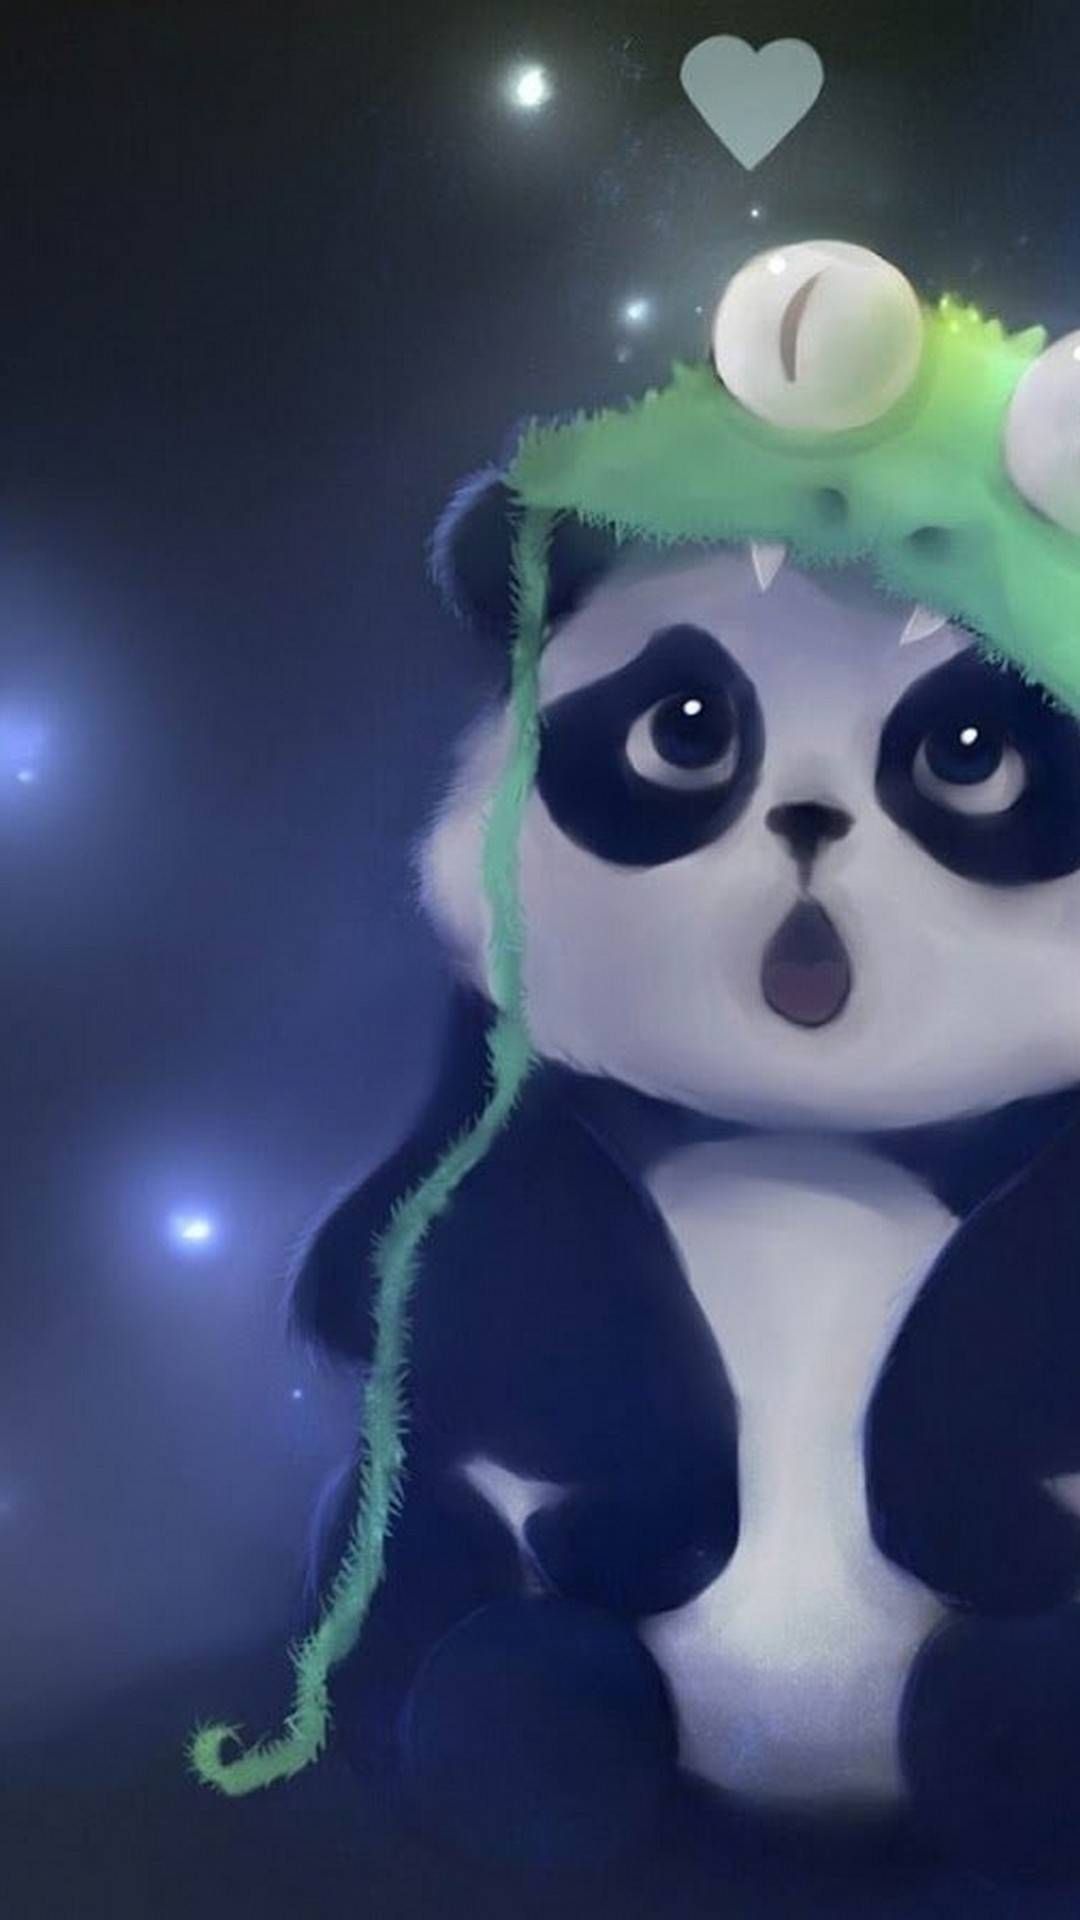 Cute Panda iPhone Wallpapers on